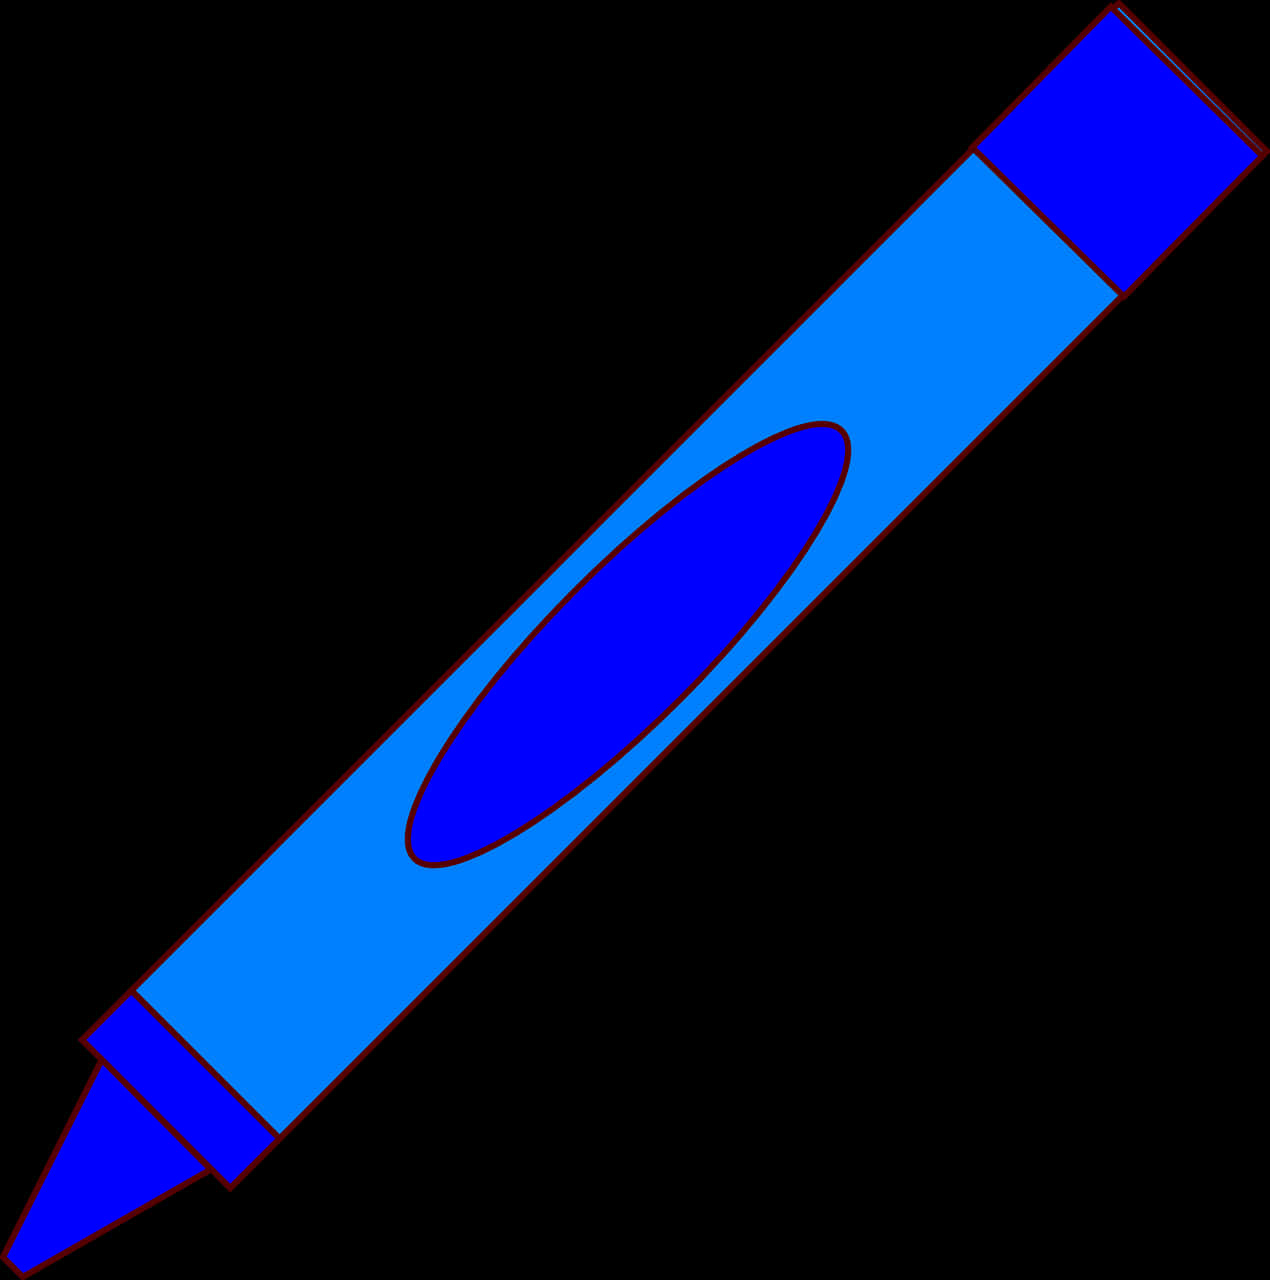 A Blue Crayon On A Black Background